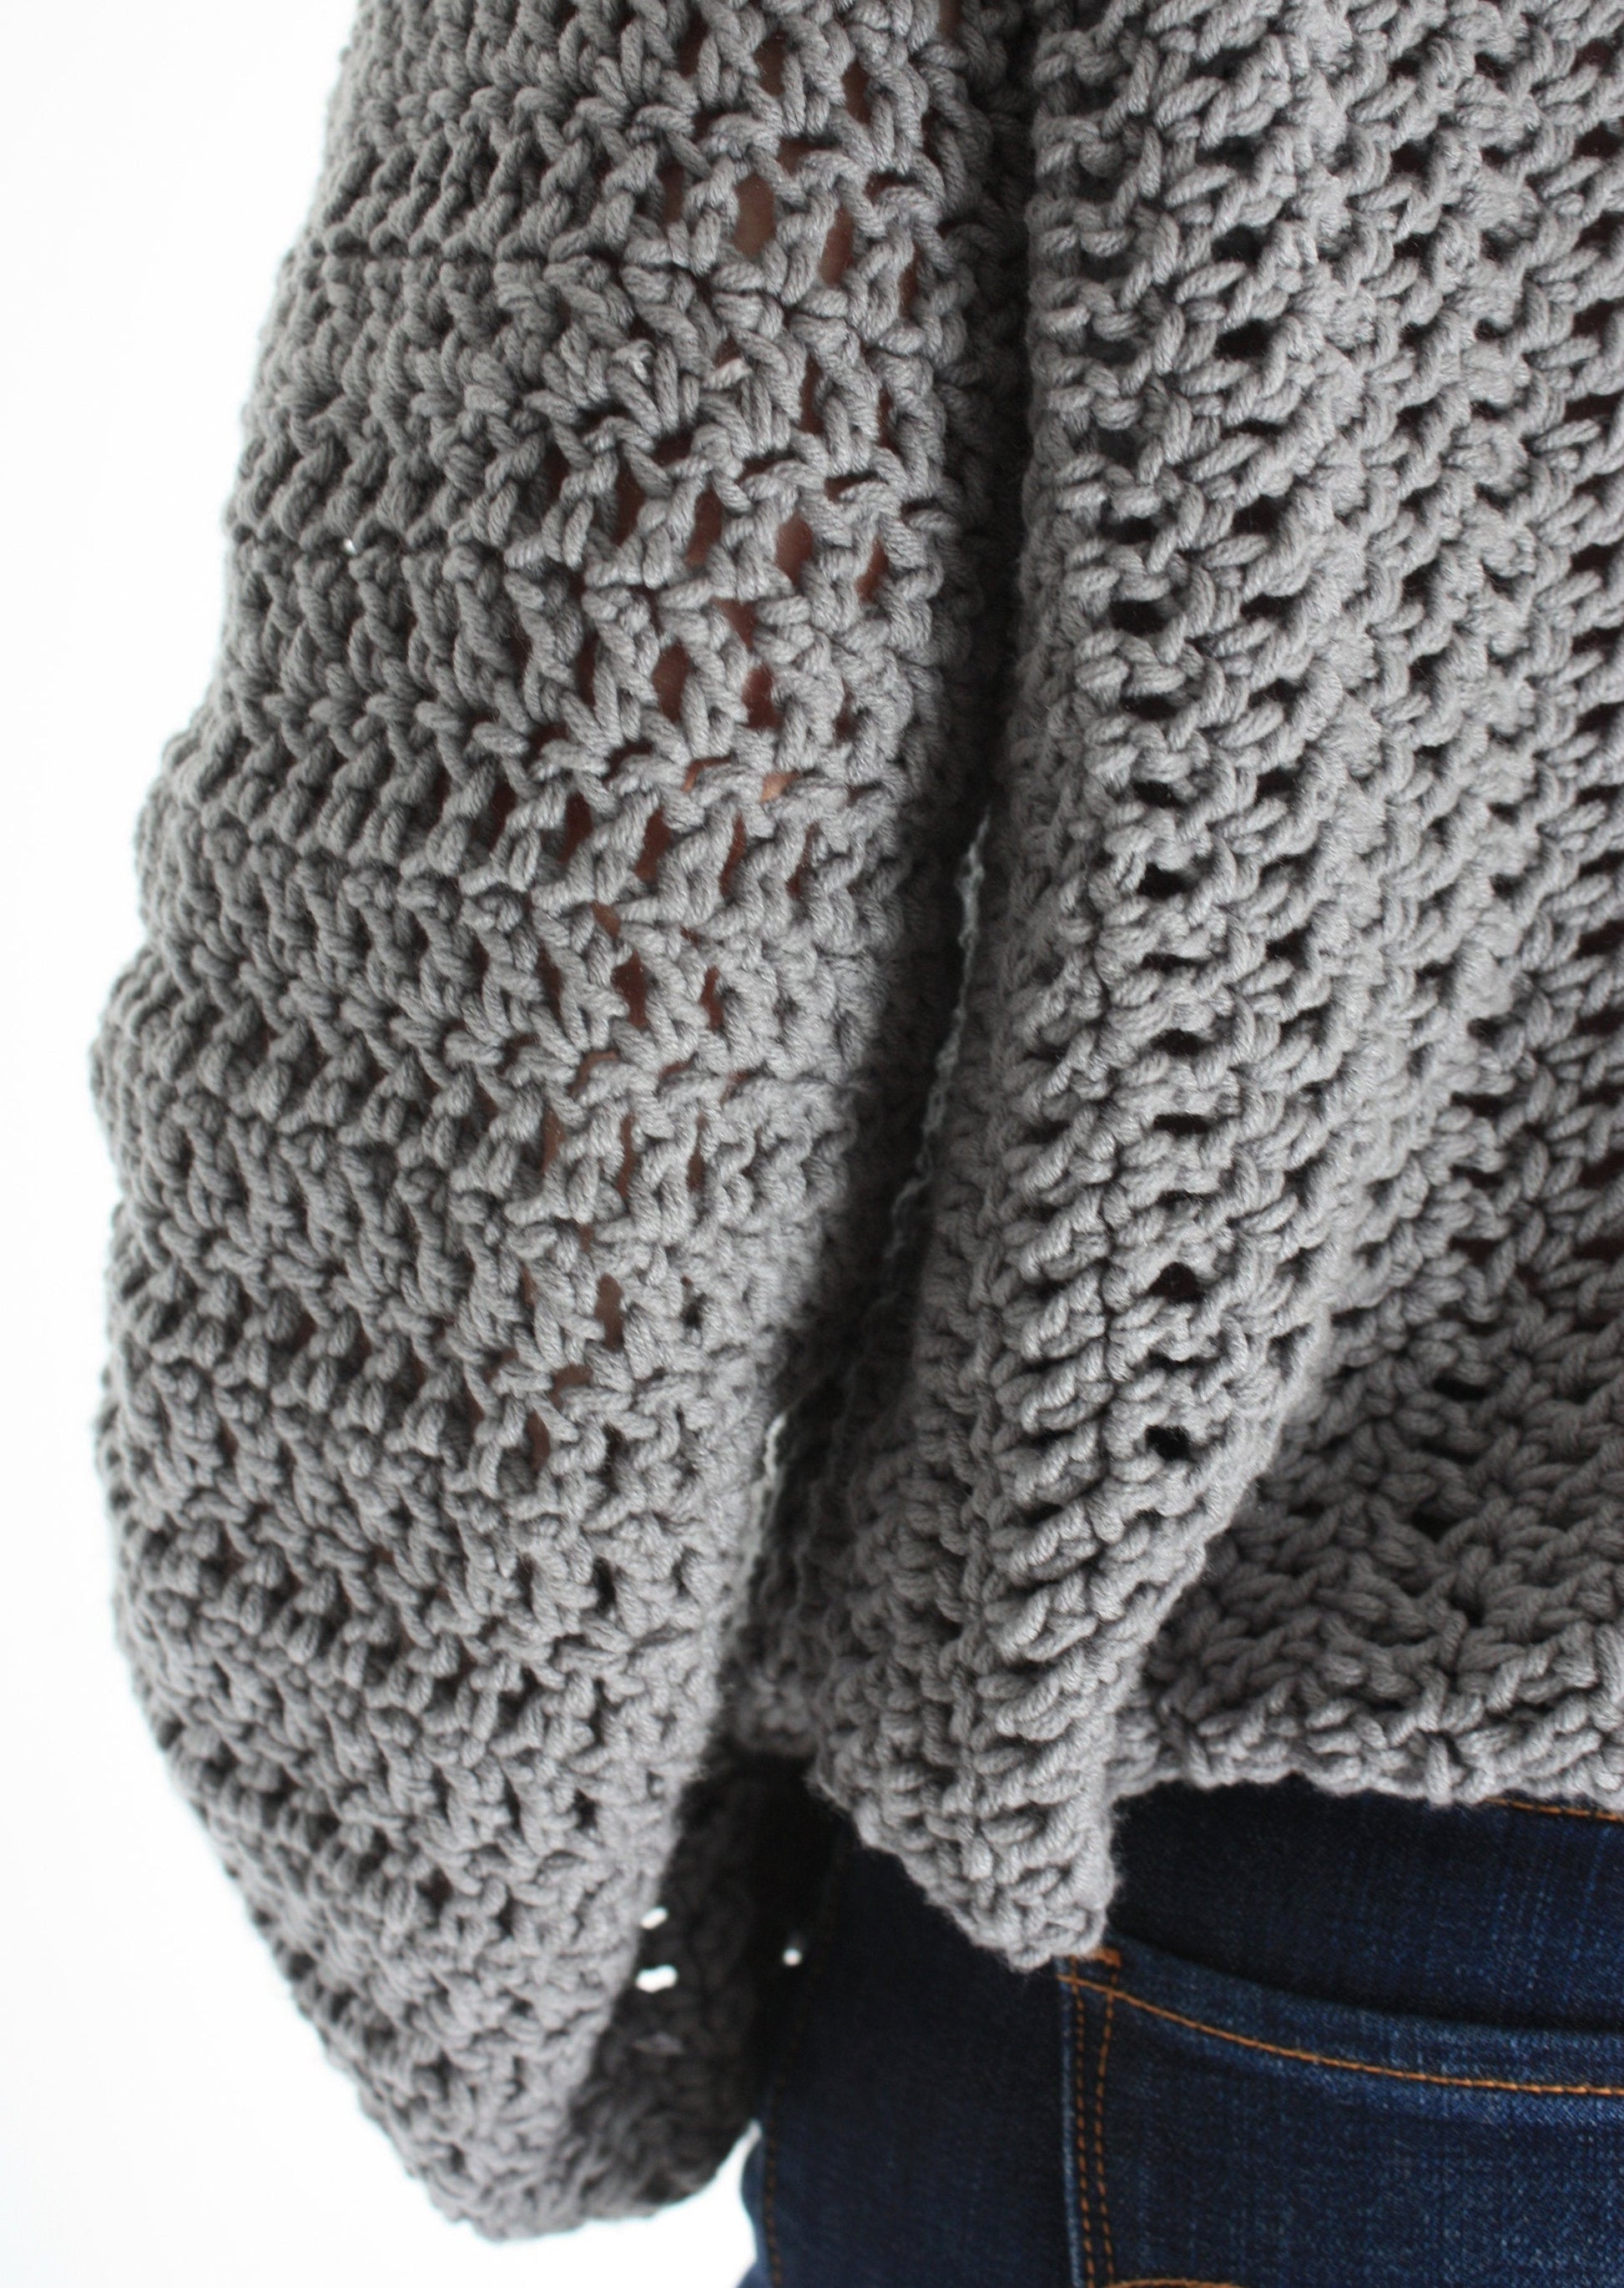 15 Best Knit Kits for Beginners - Easy Crochet Patterns